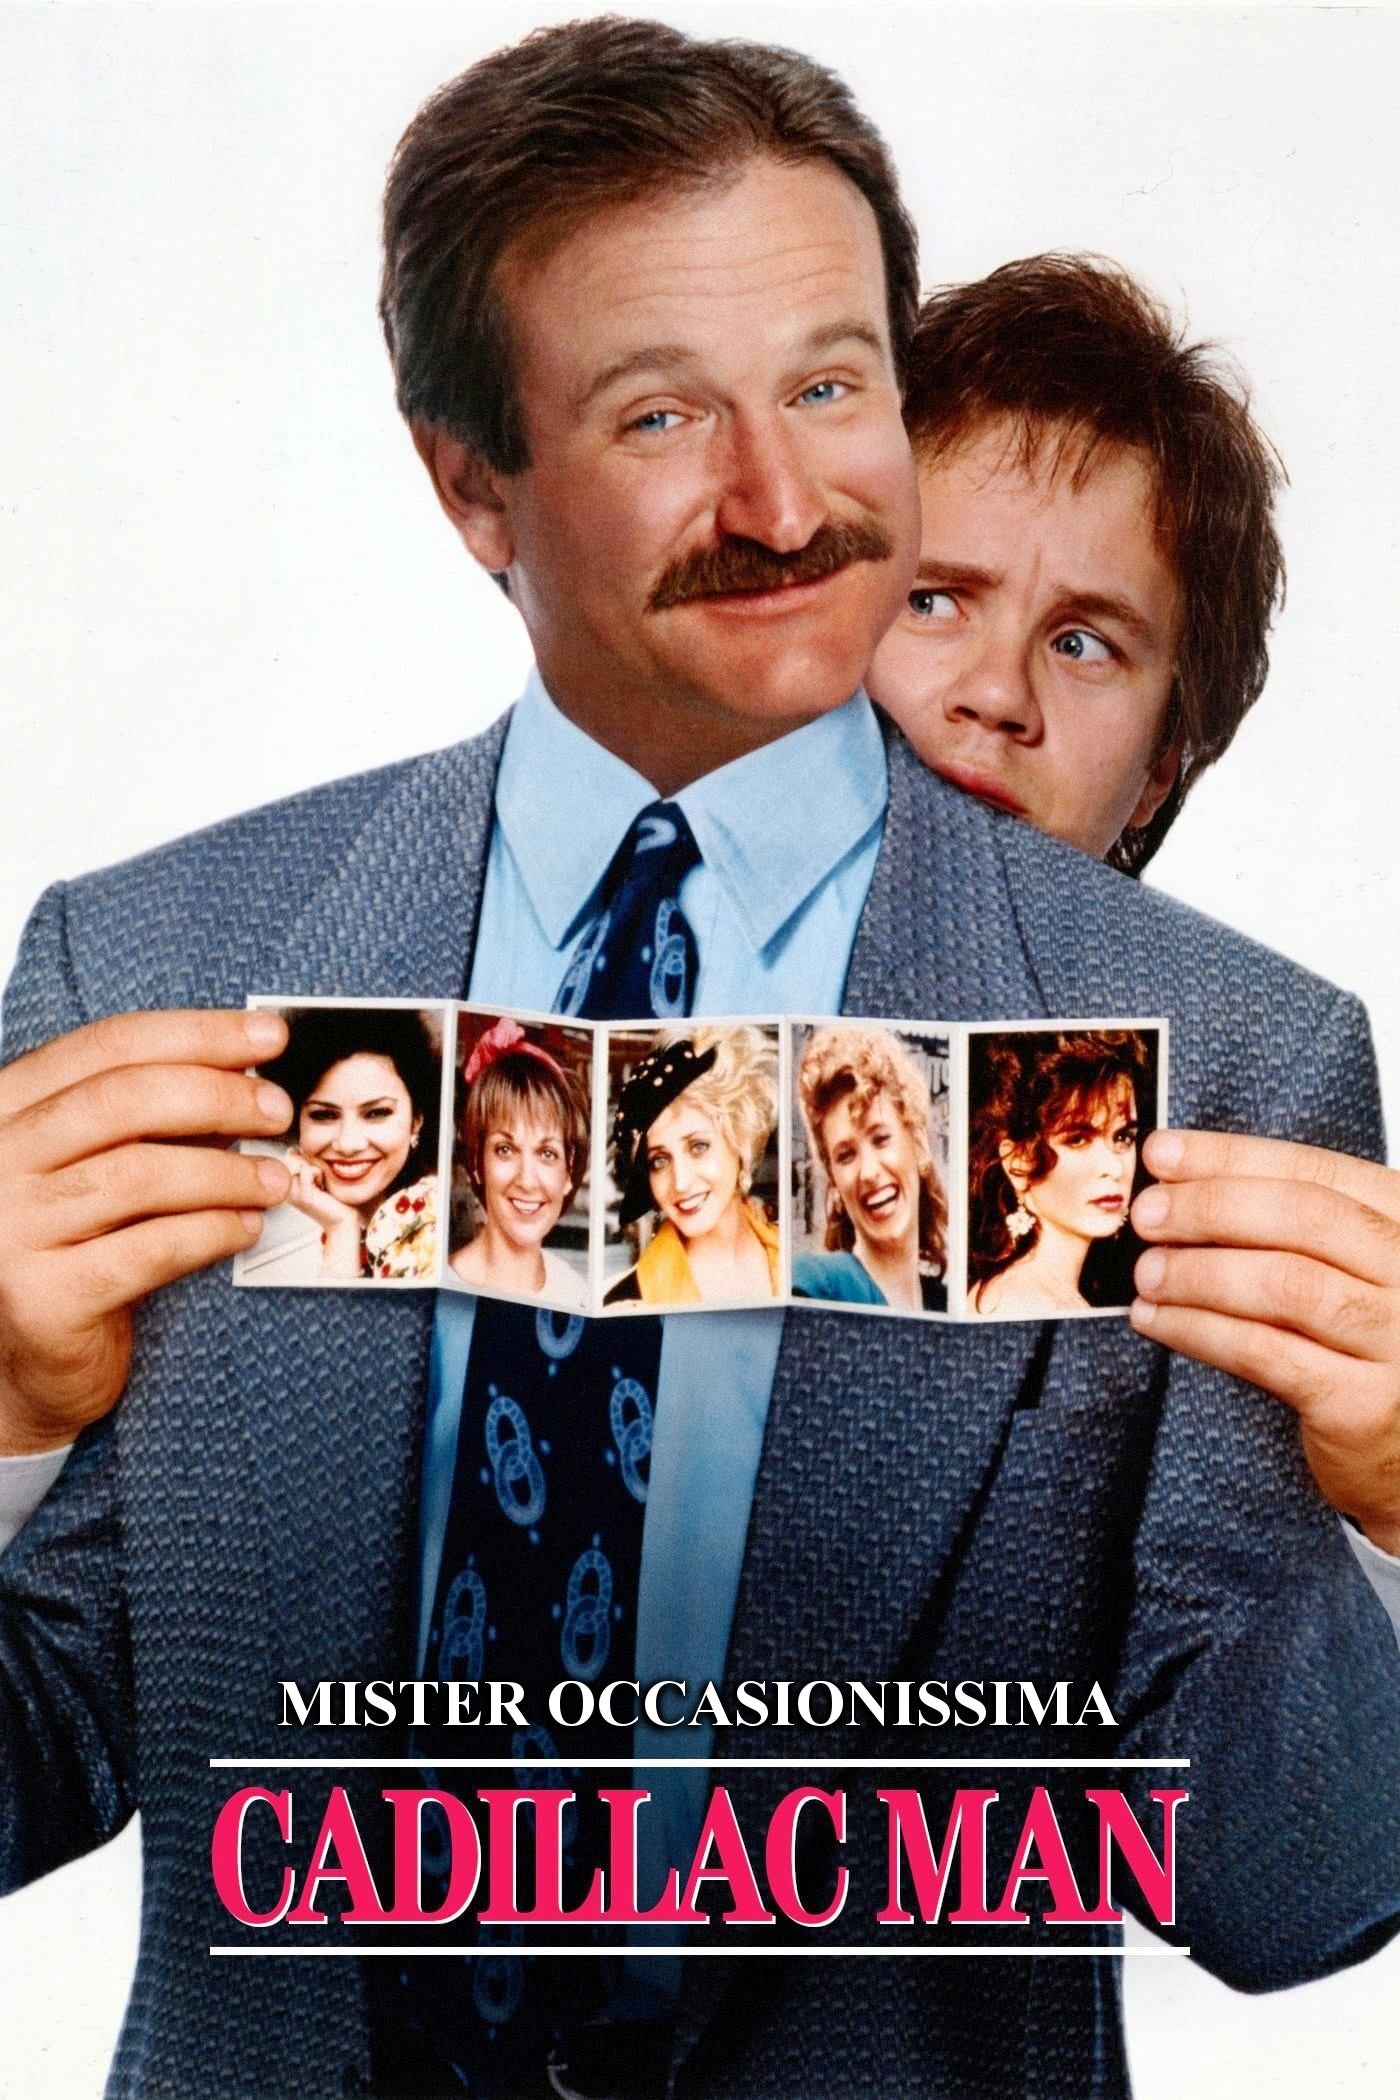 Cadillac Man – Mister Occasionissima [HD] (1990)